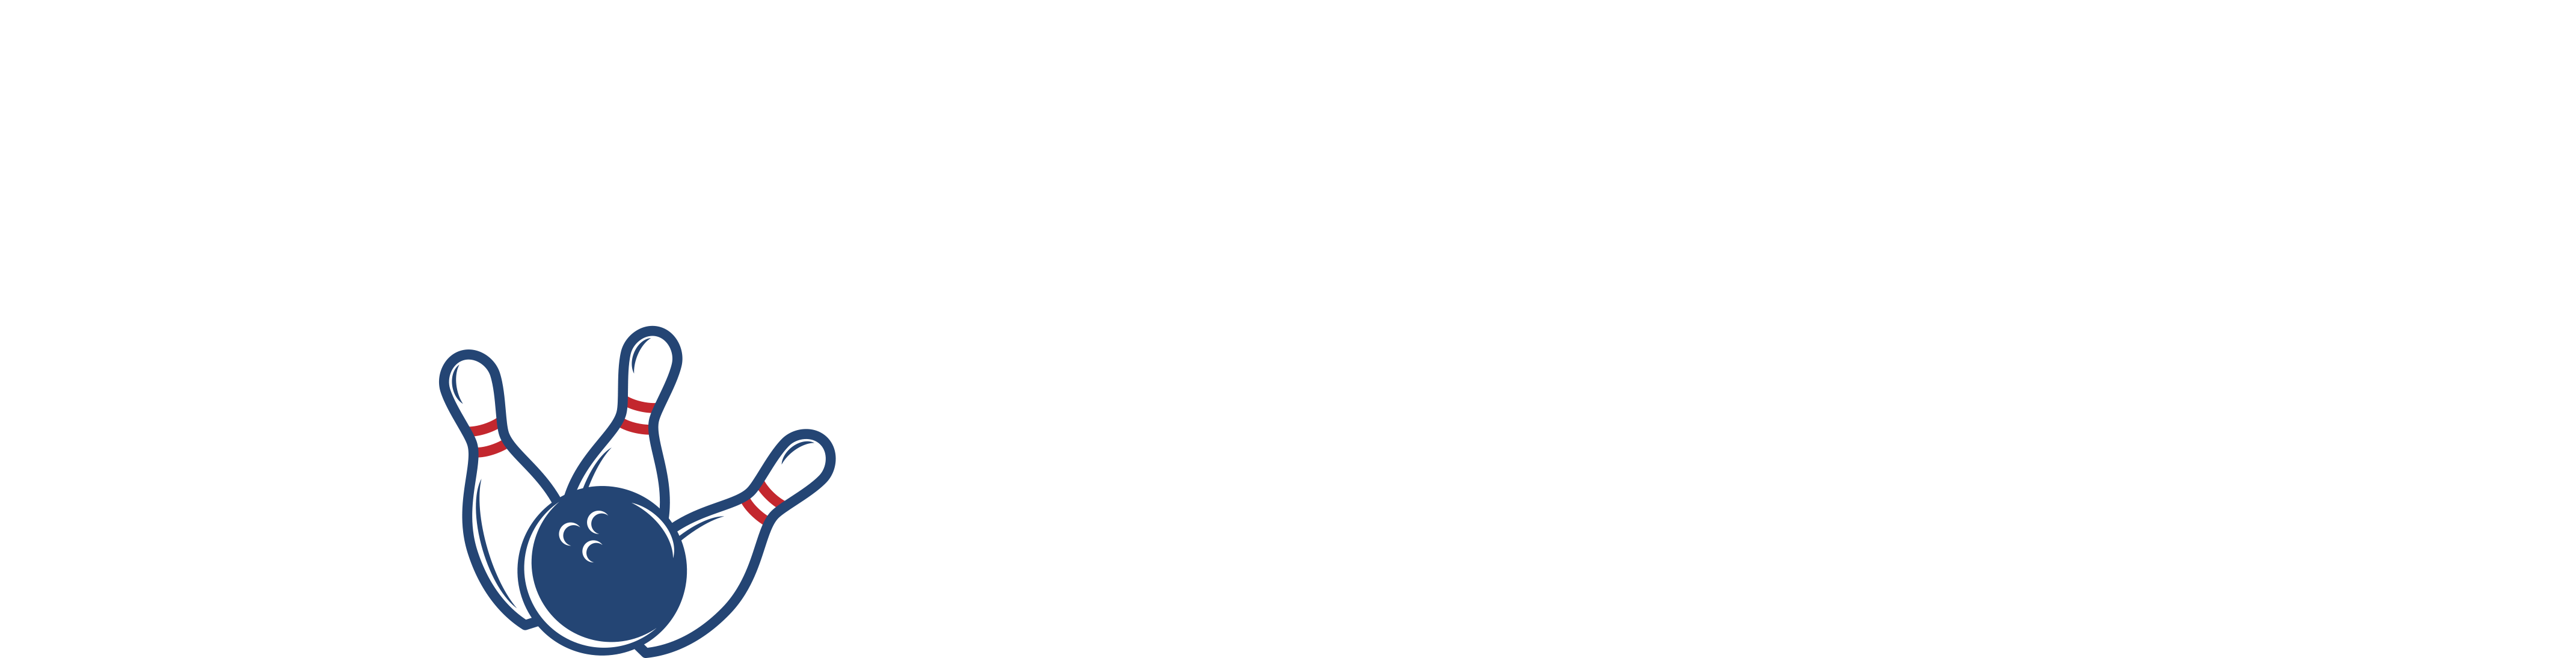 Challenge printanier